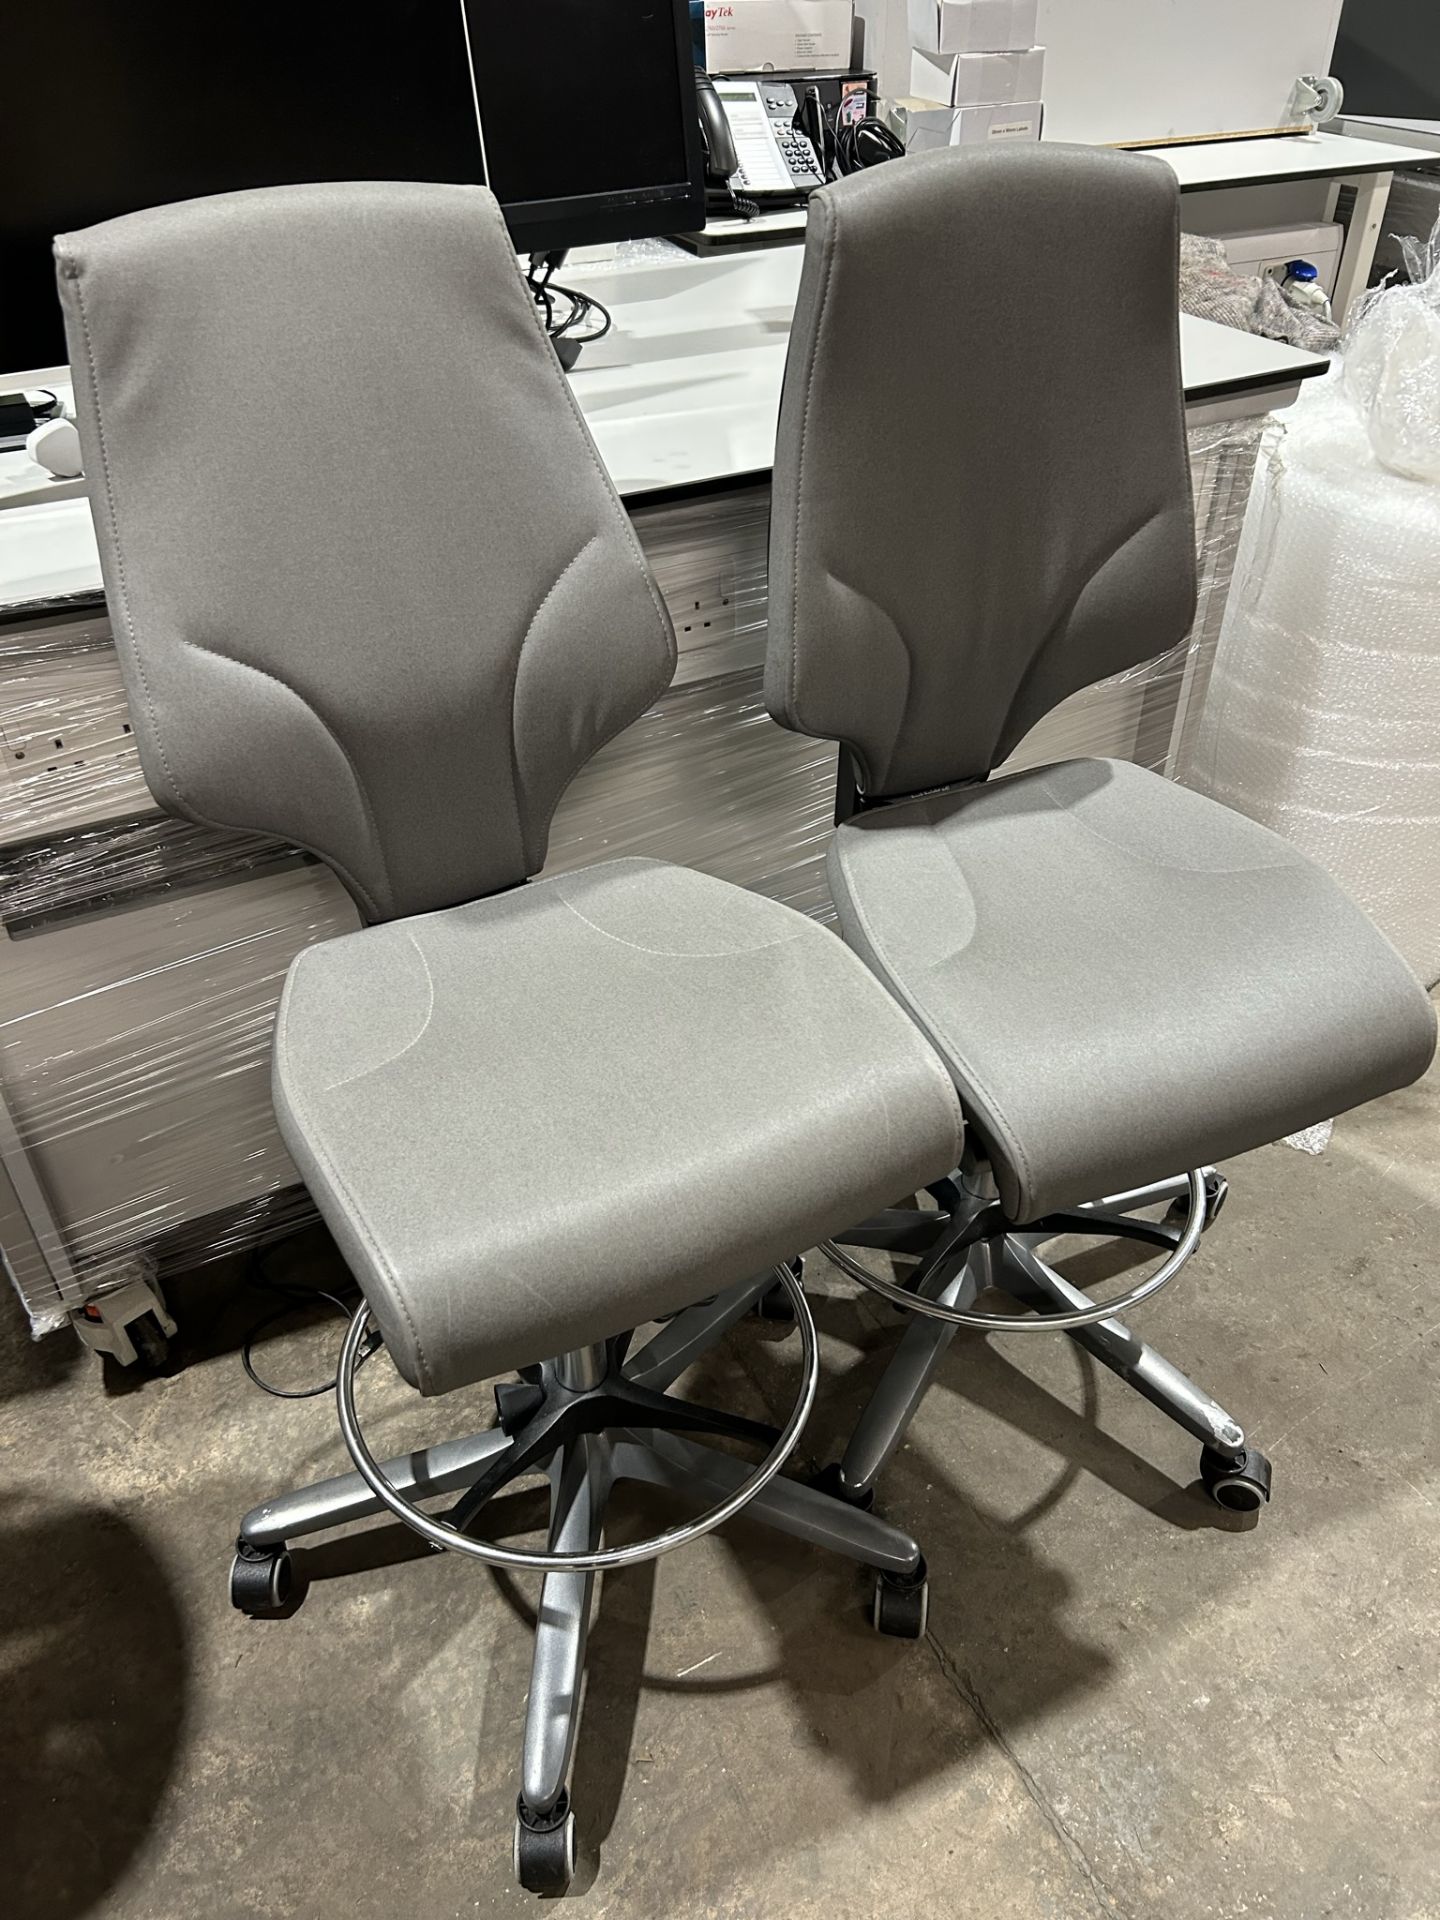 2 x Laboratory Adjustable High Back Operator Chairs - Grey - Image 2 of 3